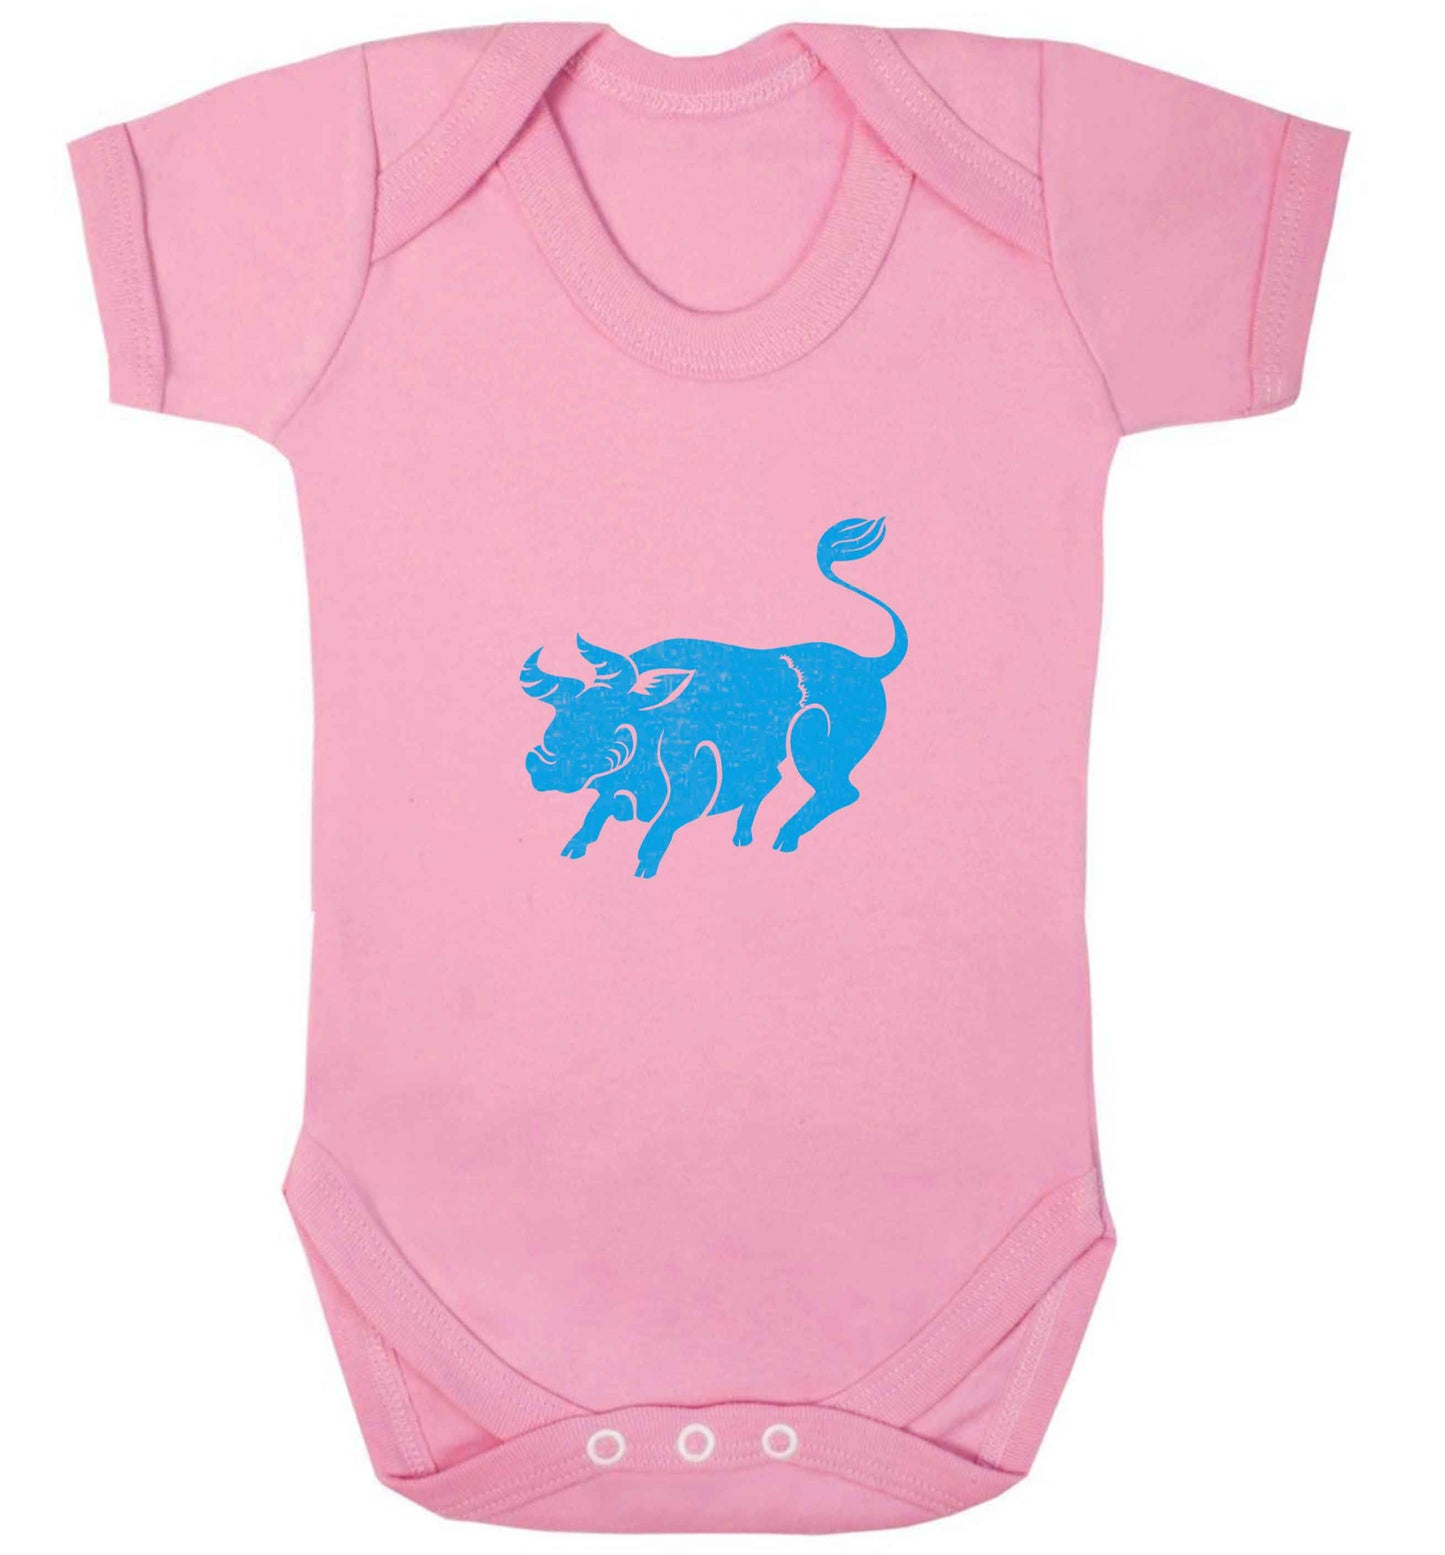 Blue ox baby vest pale pink 18-24 months